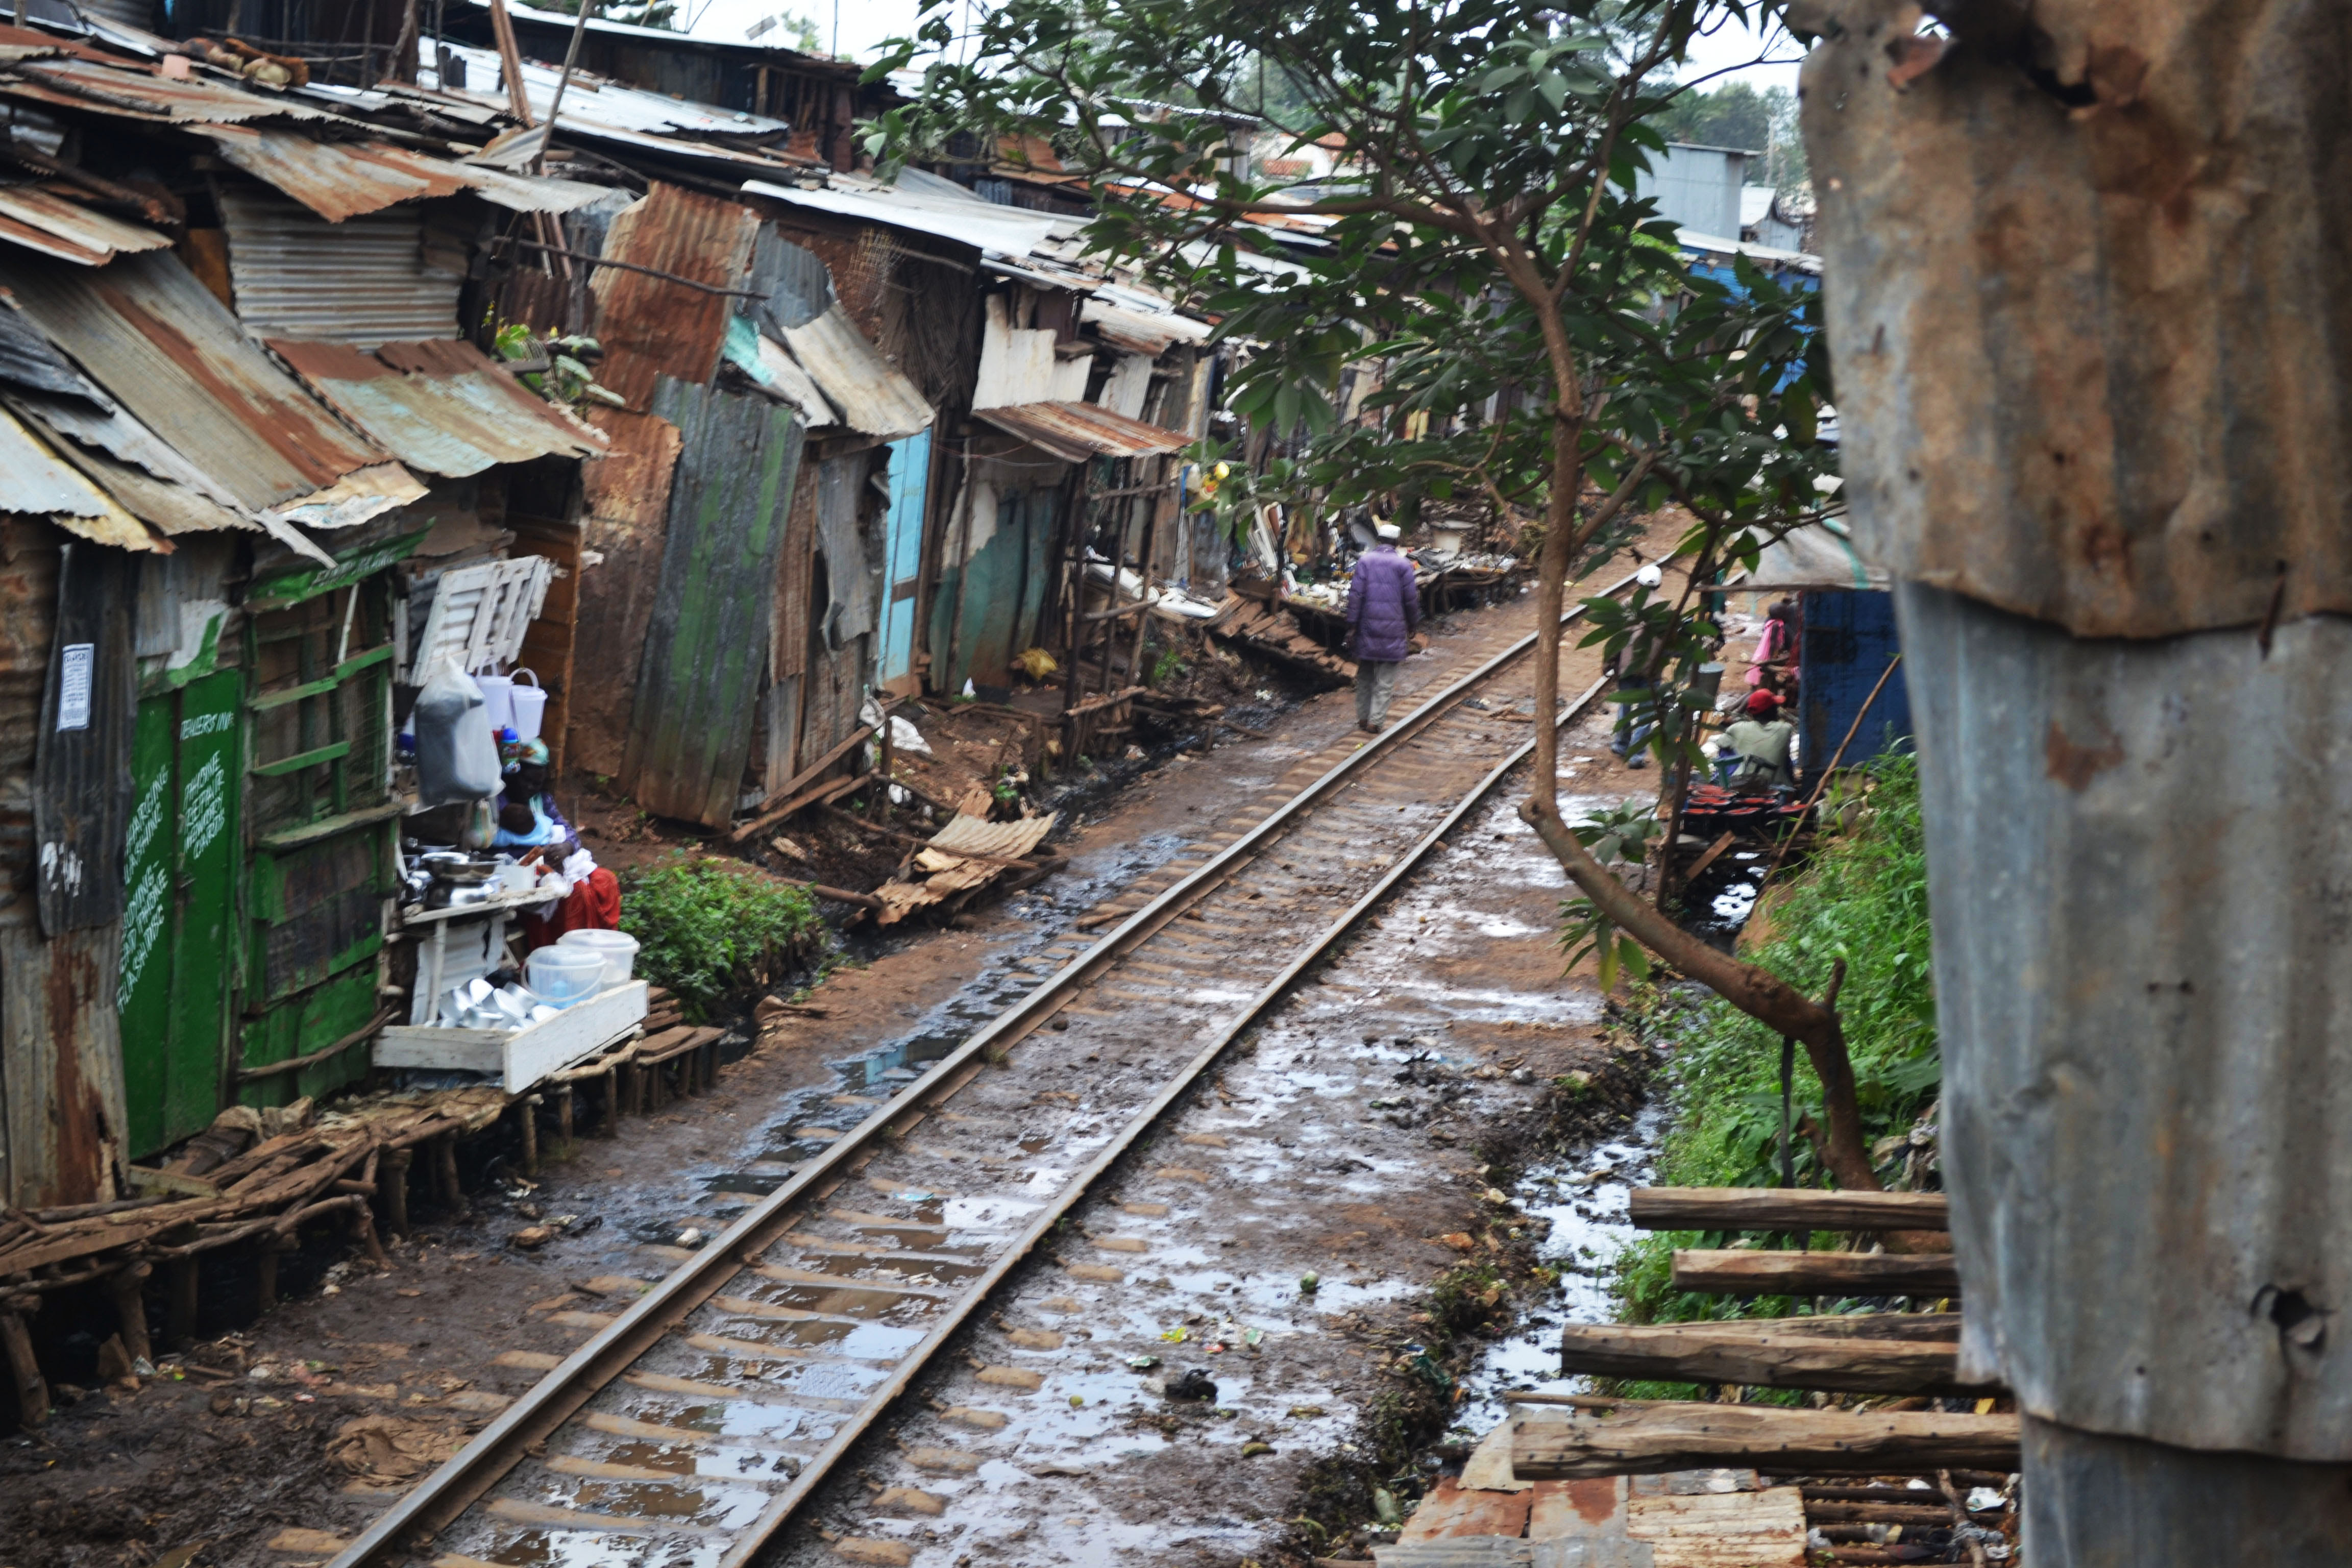 Man walks along tracks in Kibera, Kenya, the largest urban slum in Africa